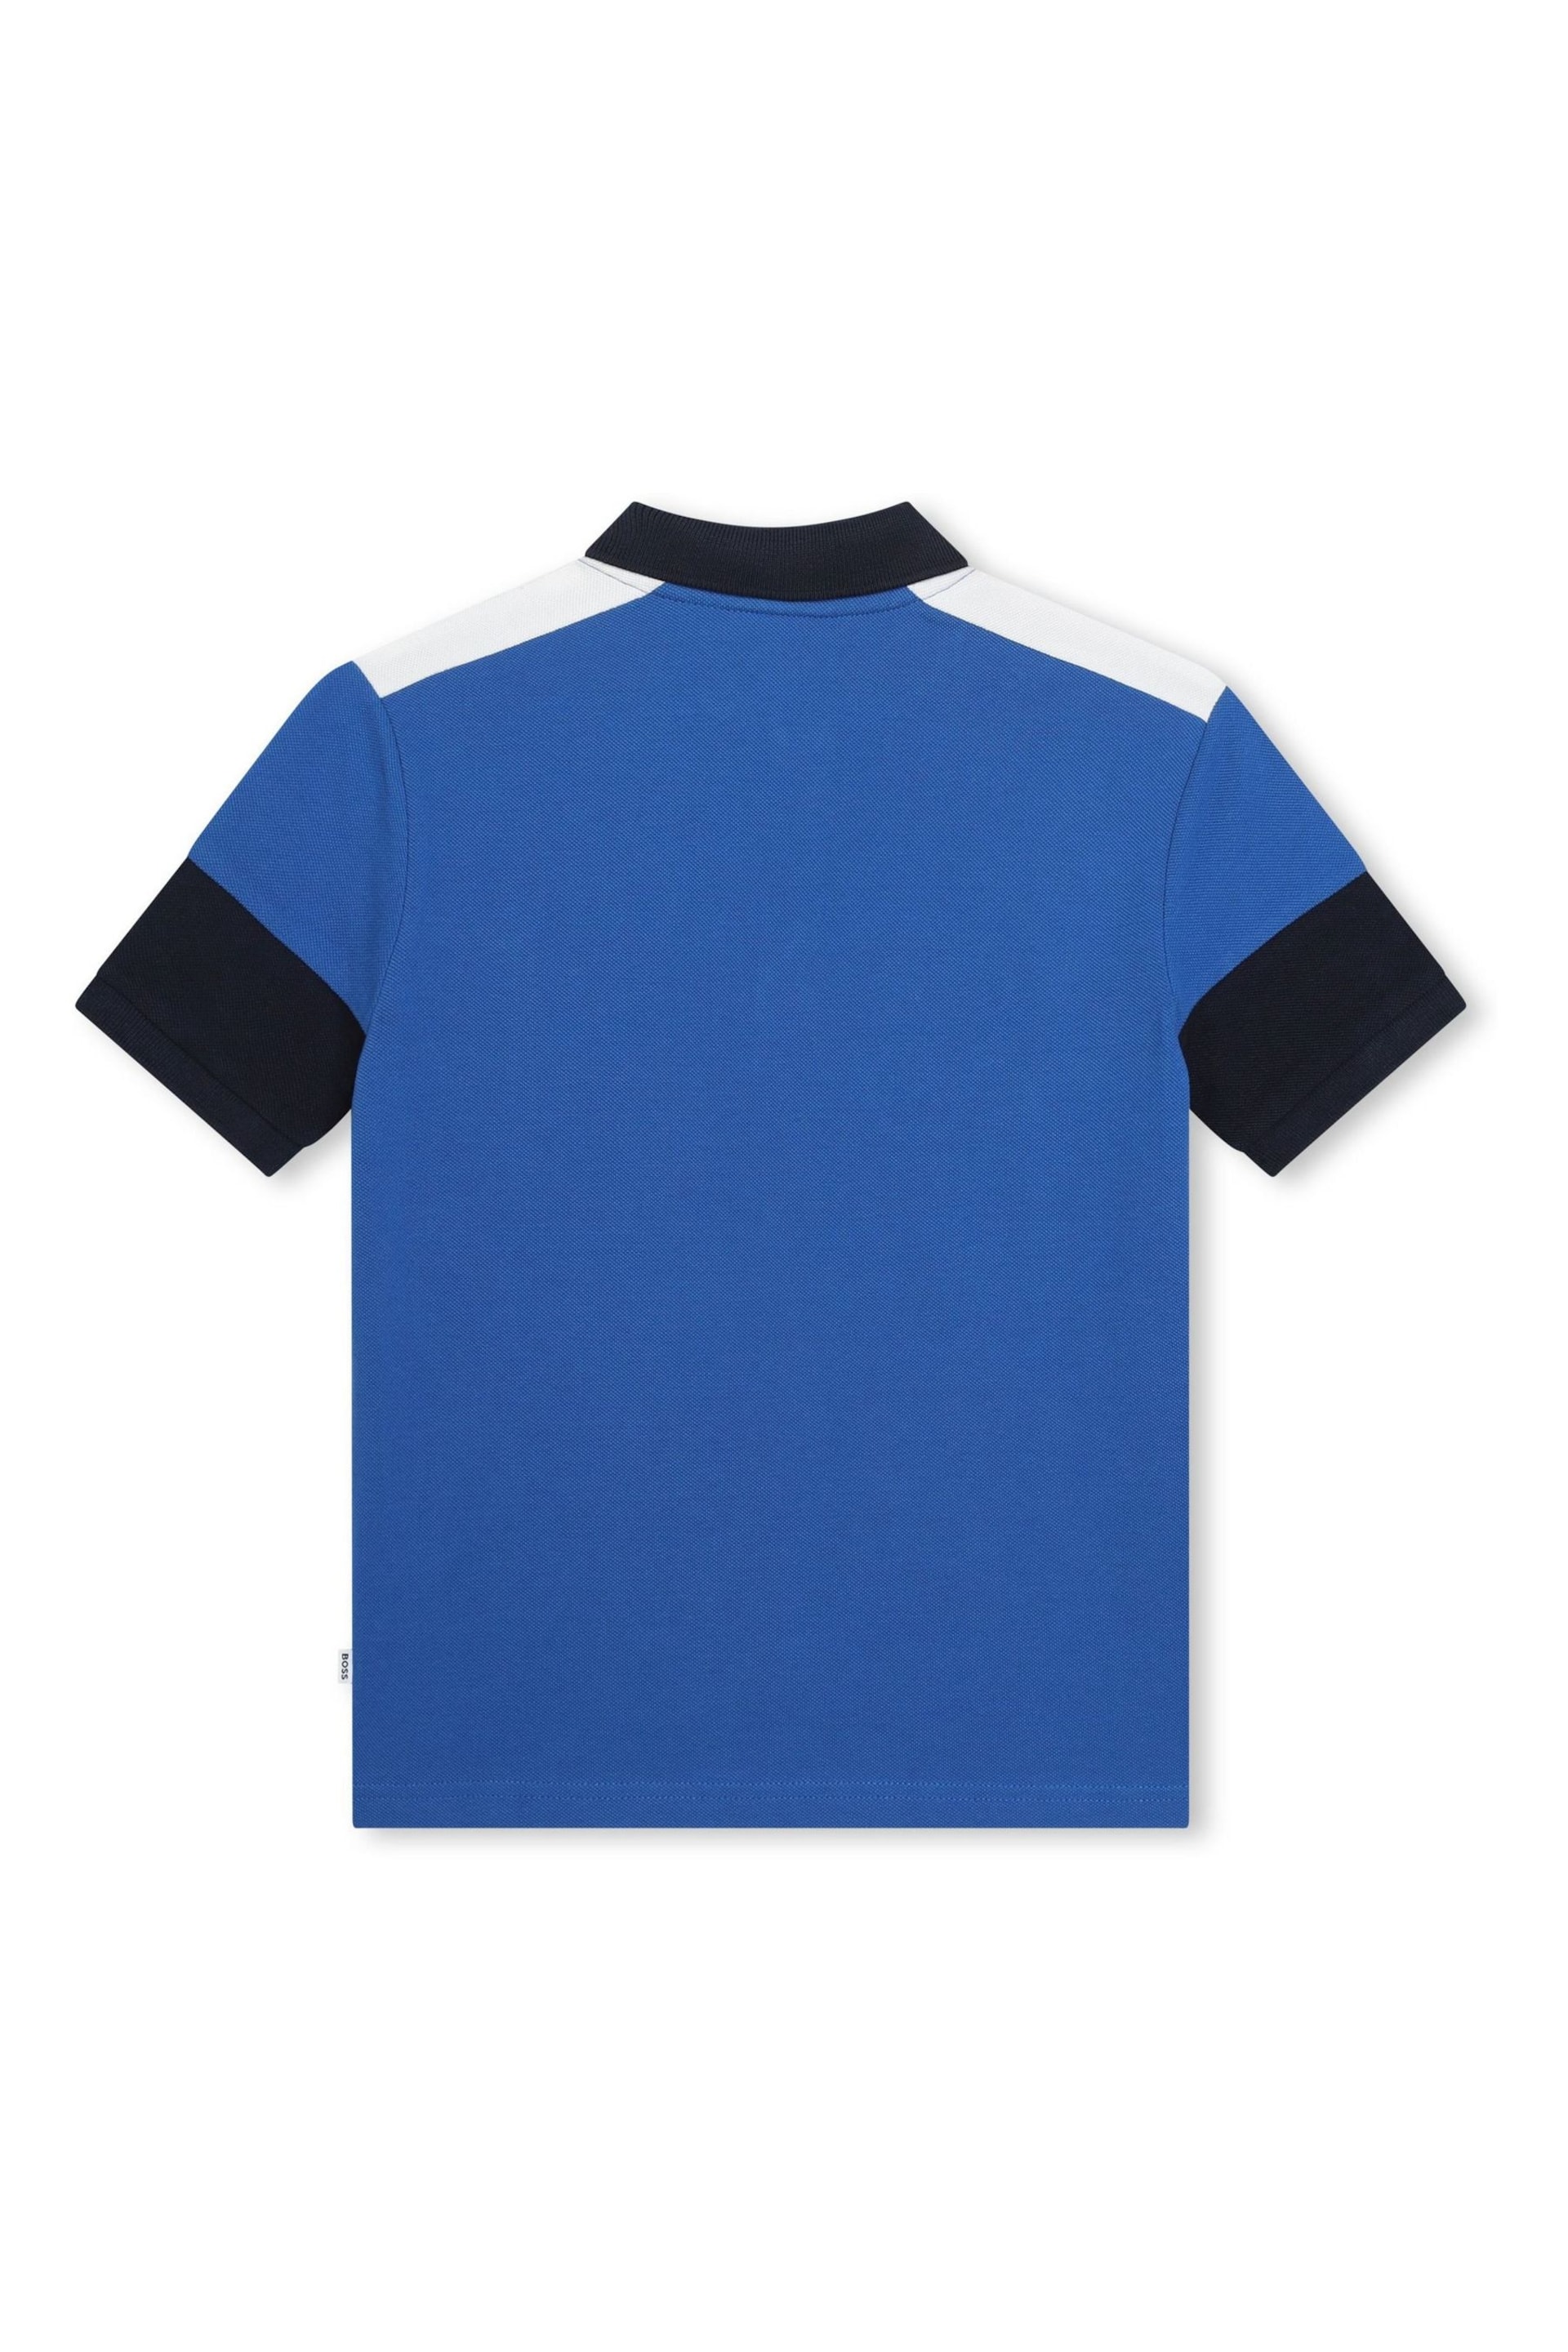 BOSS Blue Colourblock Polo And Shorts Set - Image 5 of 7